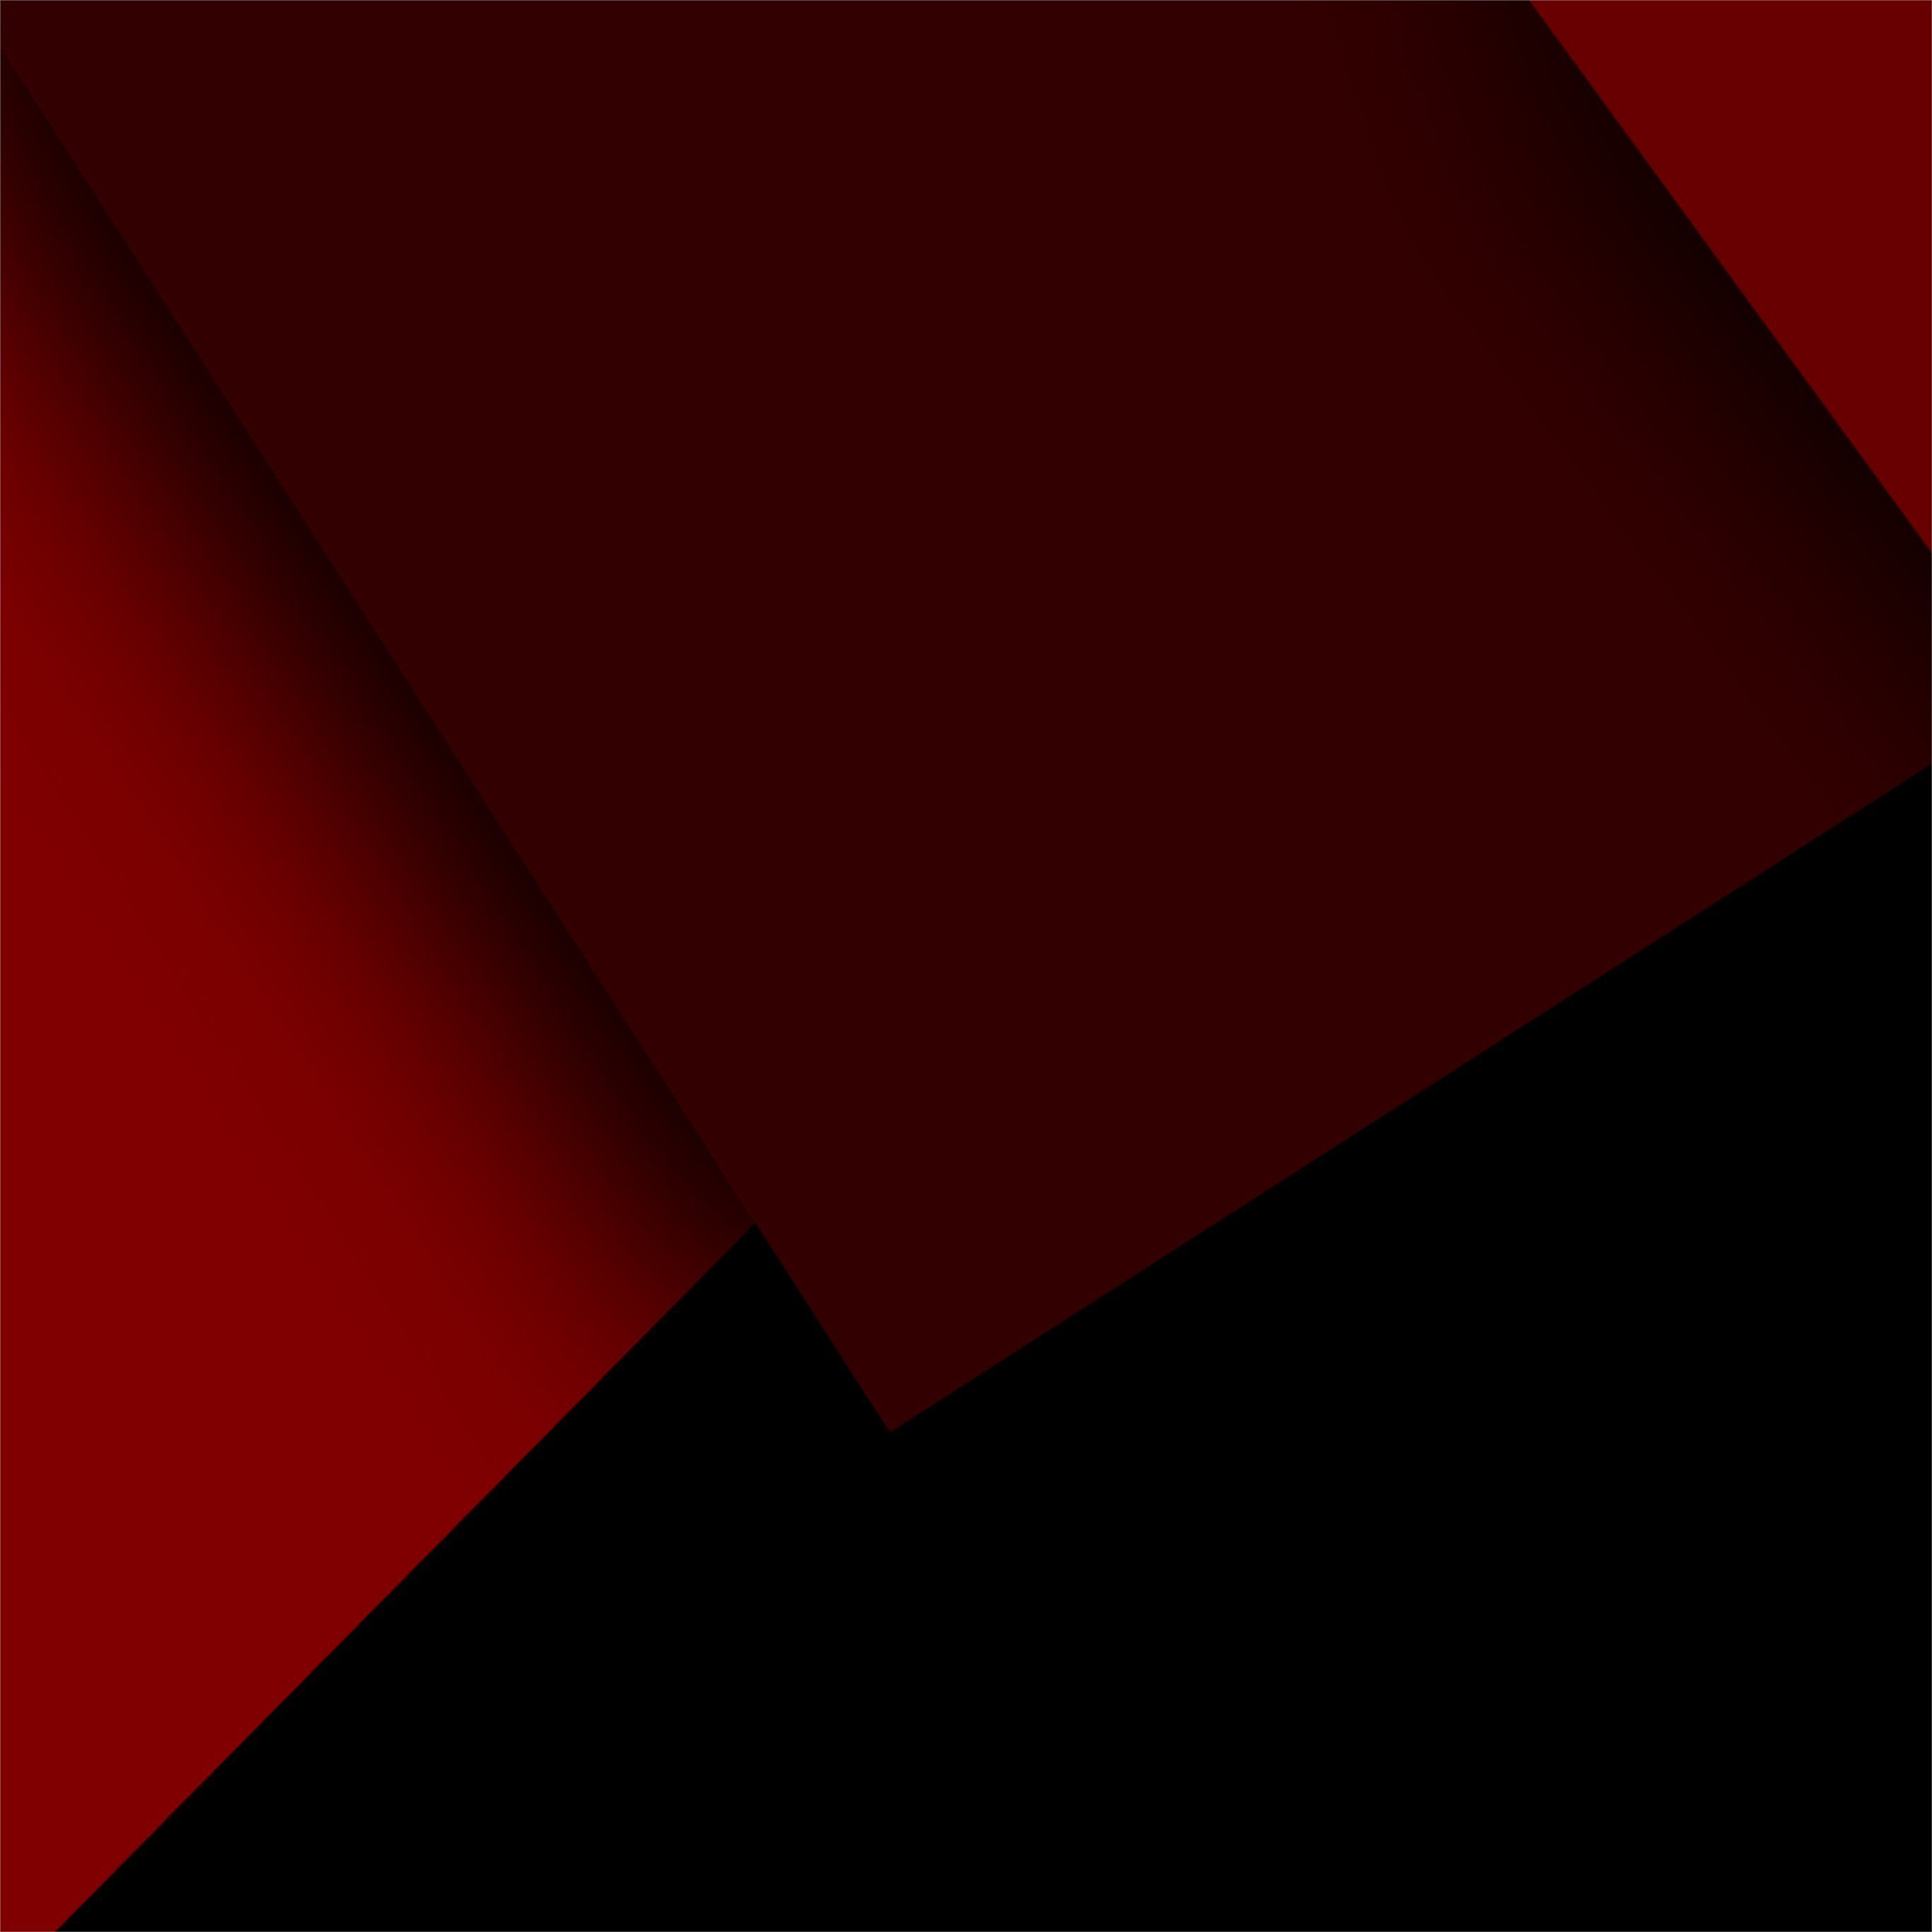 dark red black abstract 4k iPad Pro Wallpaper Free Download